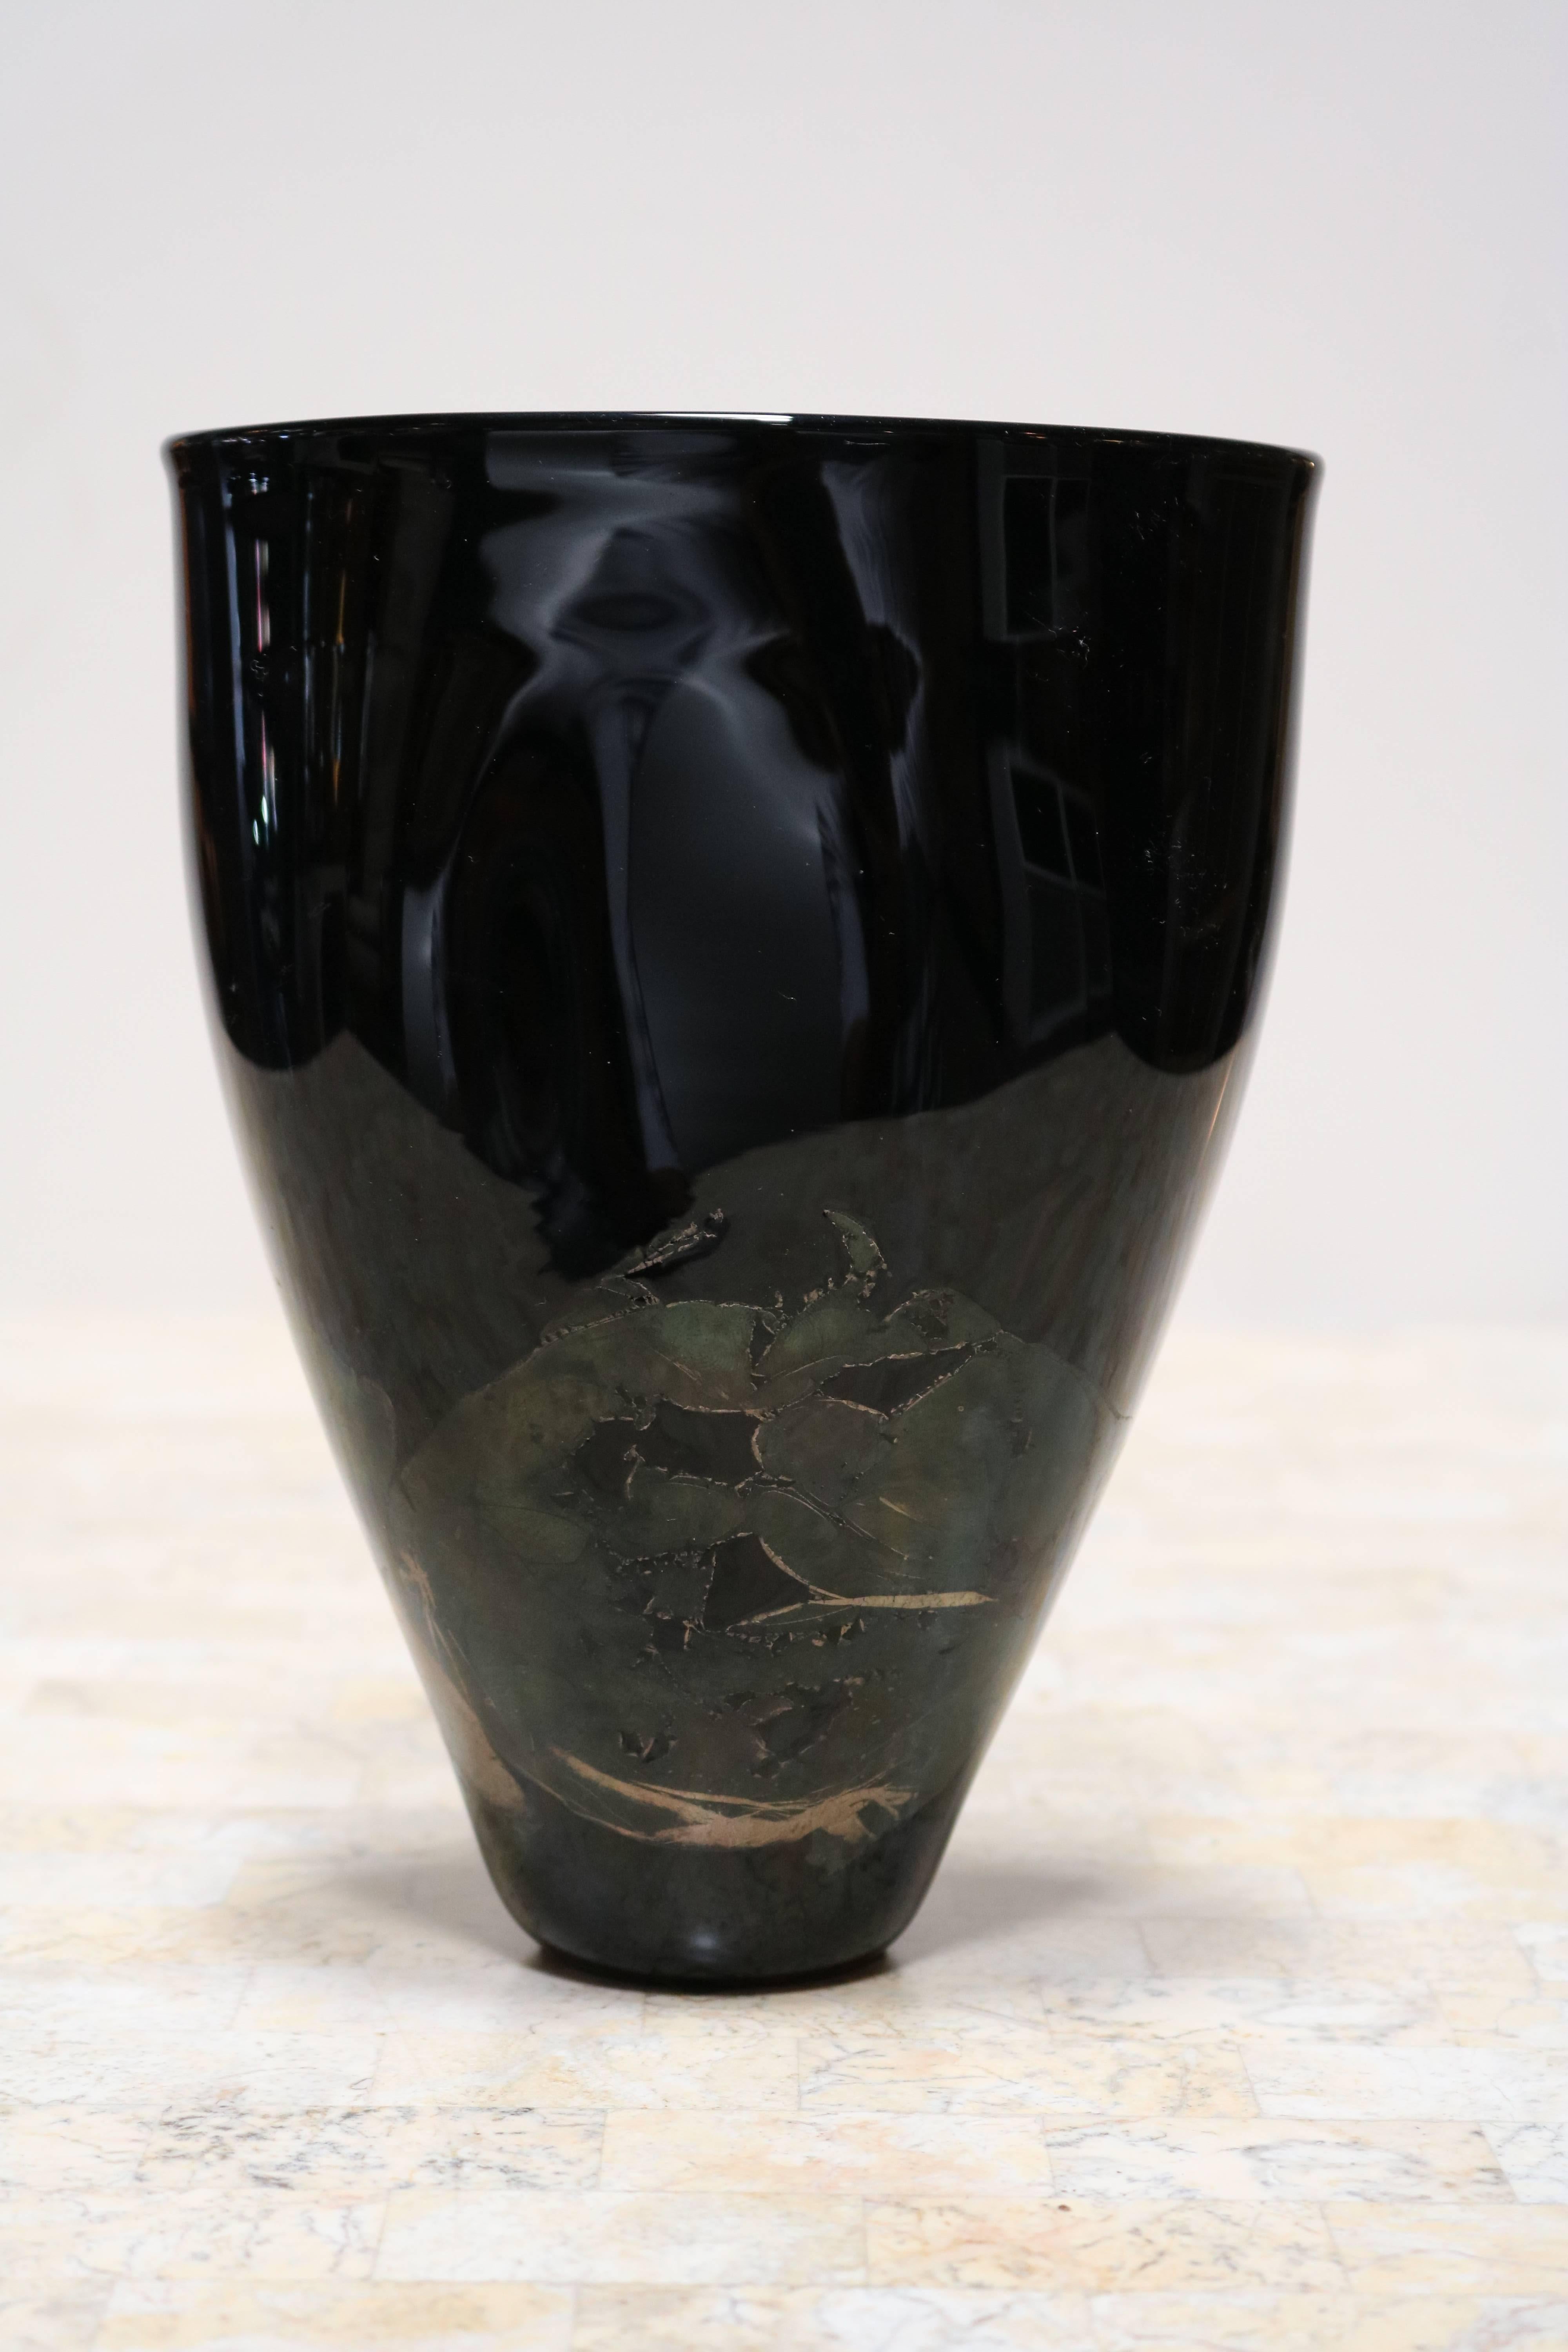 Organic black glass vase with iridescent overlay.